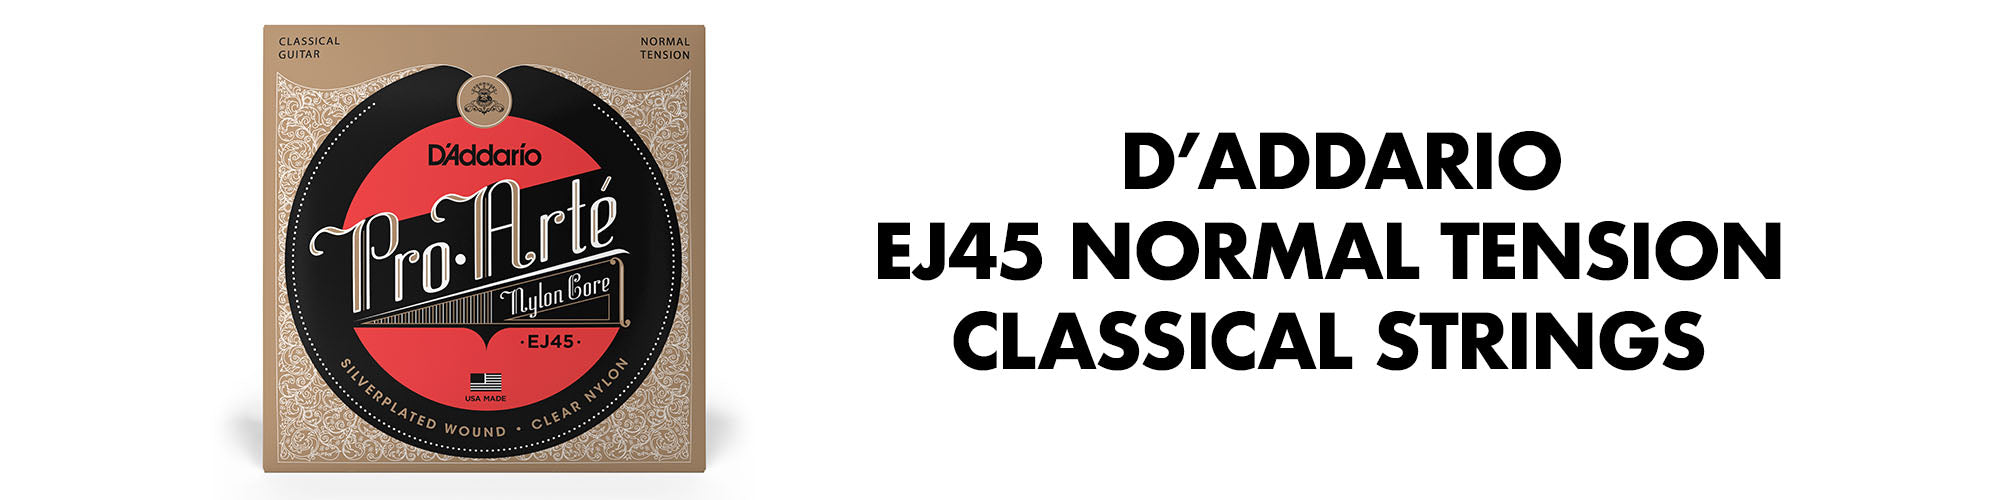 D'Addario EJ45 Pro Arte Classical Normal Tension Guitar Strings